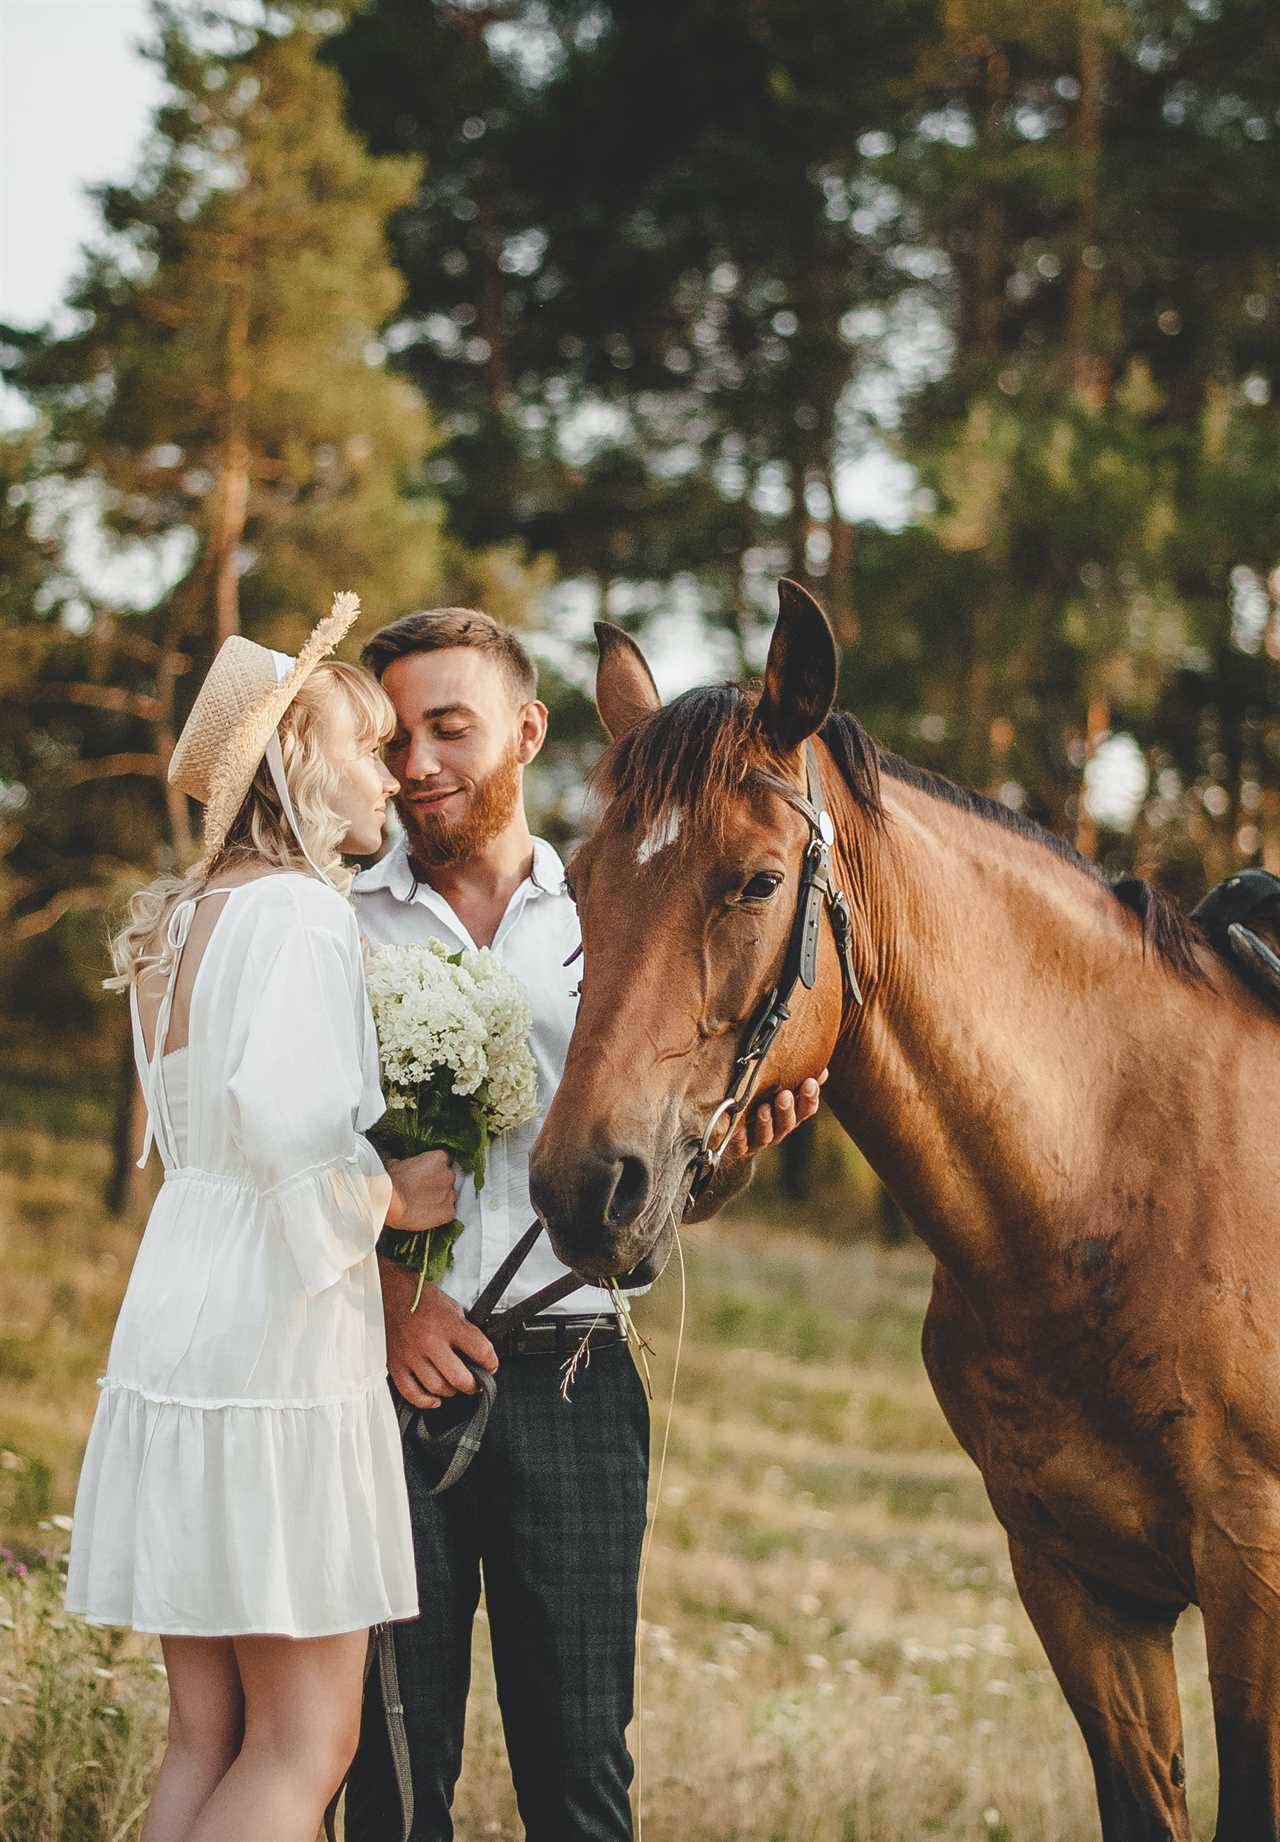 wedding tips for brides